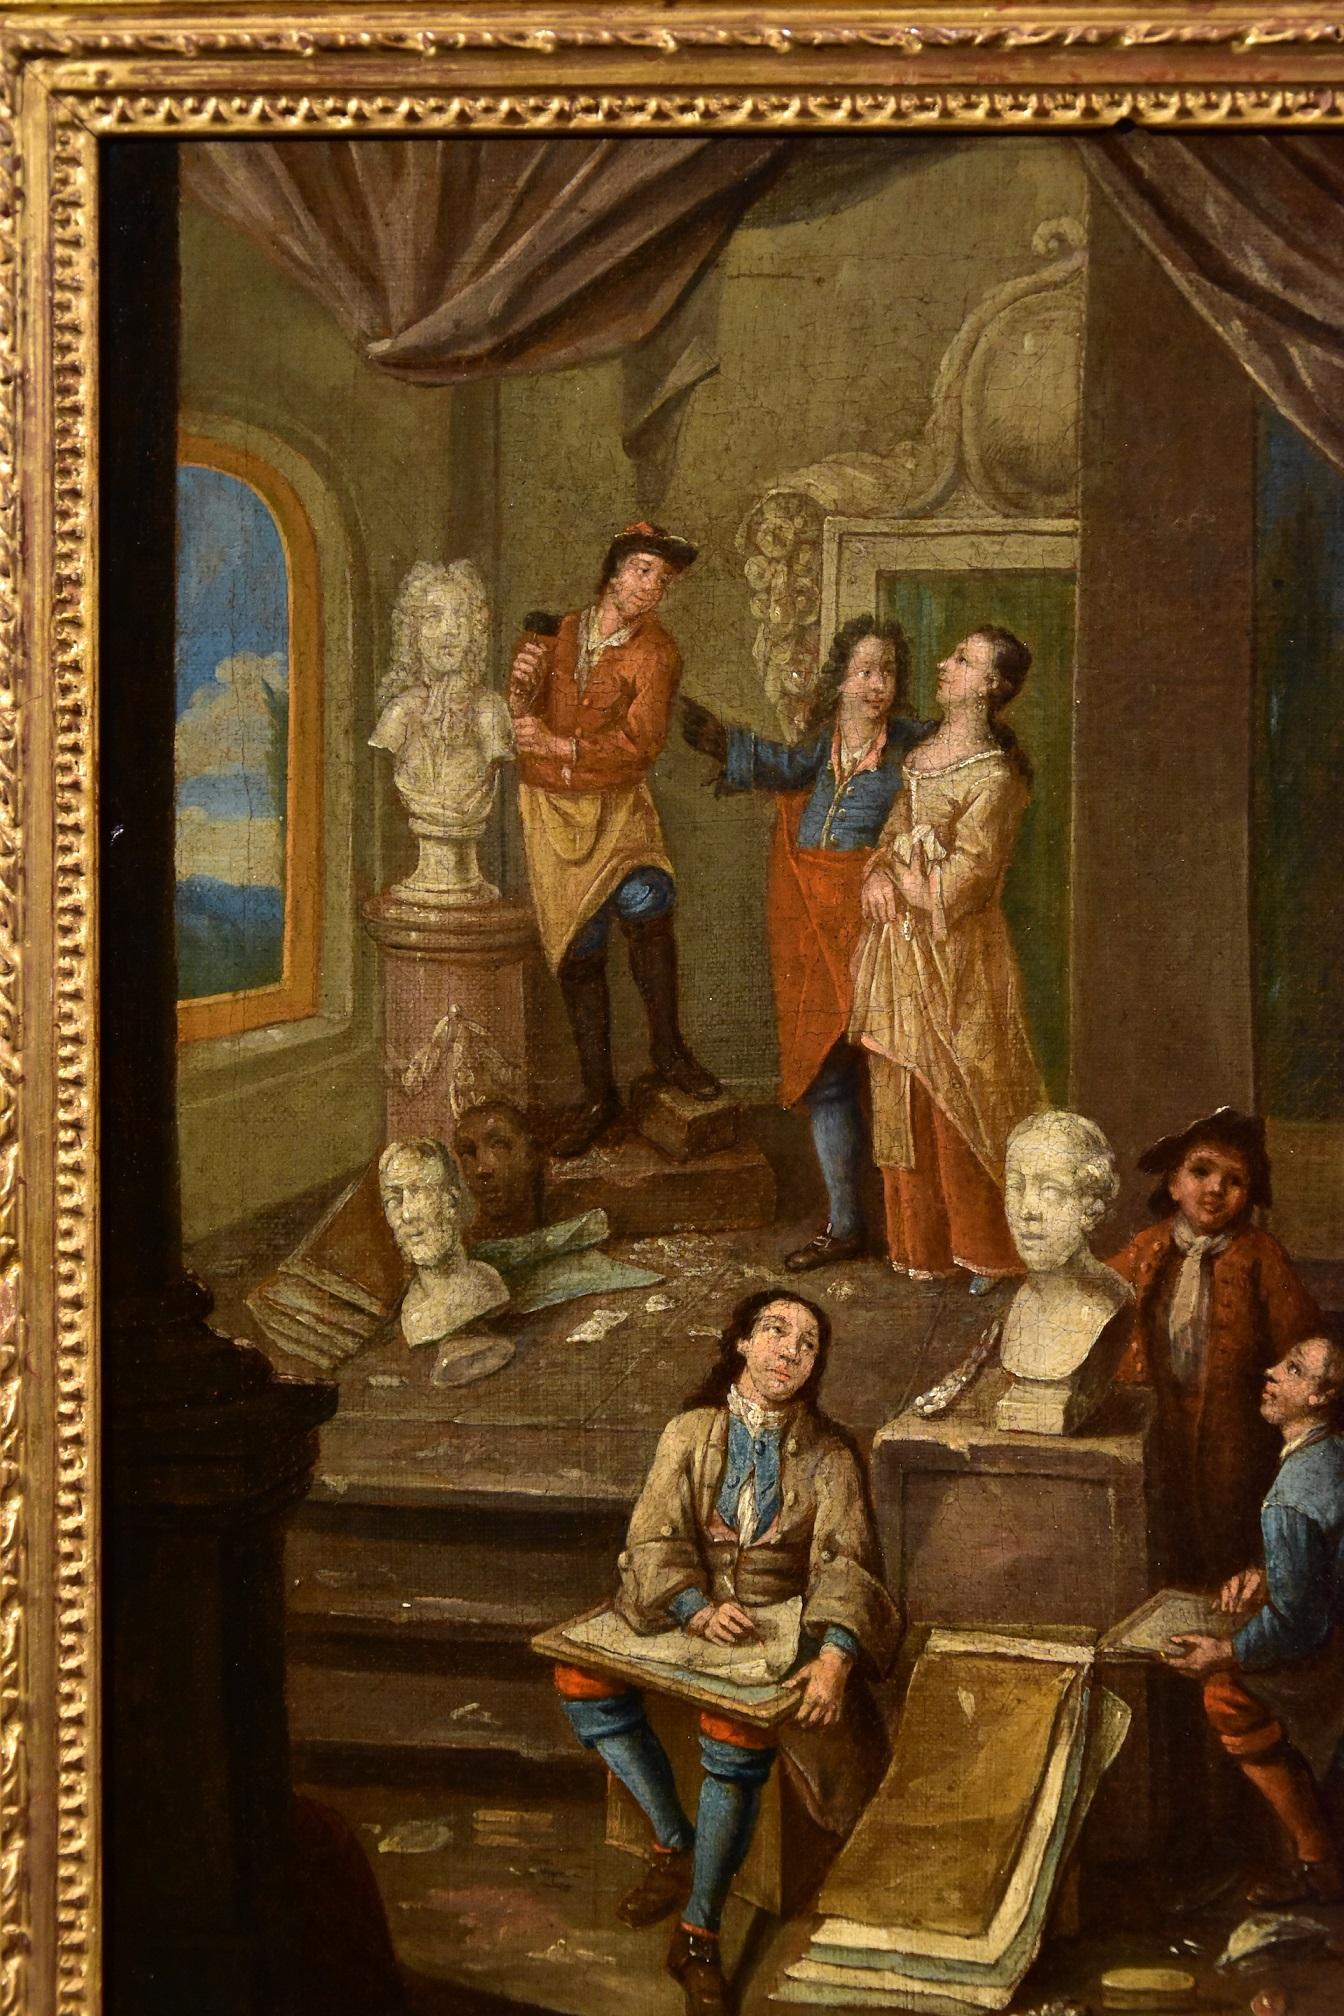 Artist Horemans Paint Oil on canvas Old master 18th Century Flemish Painter Art - Old Masters Painting by Jan Josef Horemans the Elder (Antwerp 1682-1752)